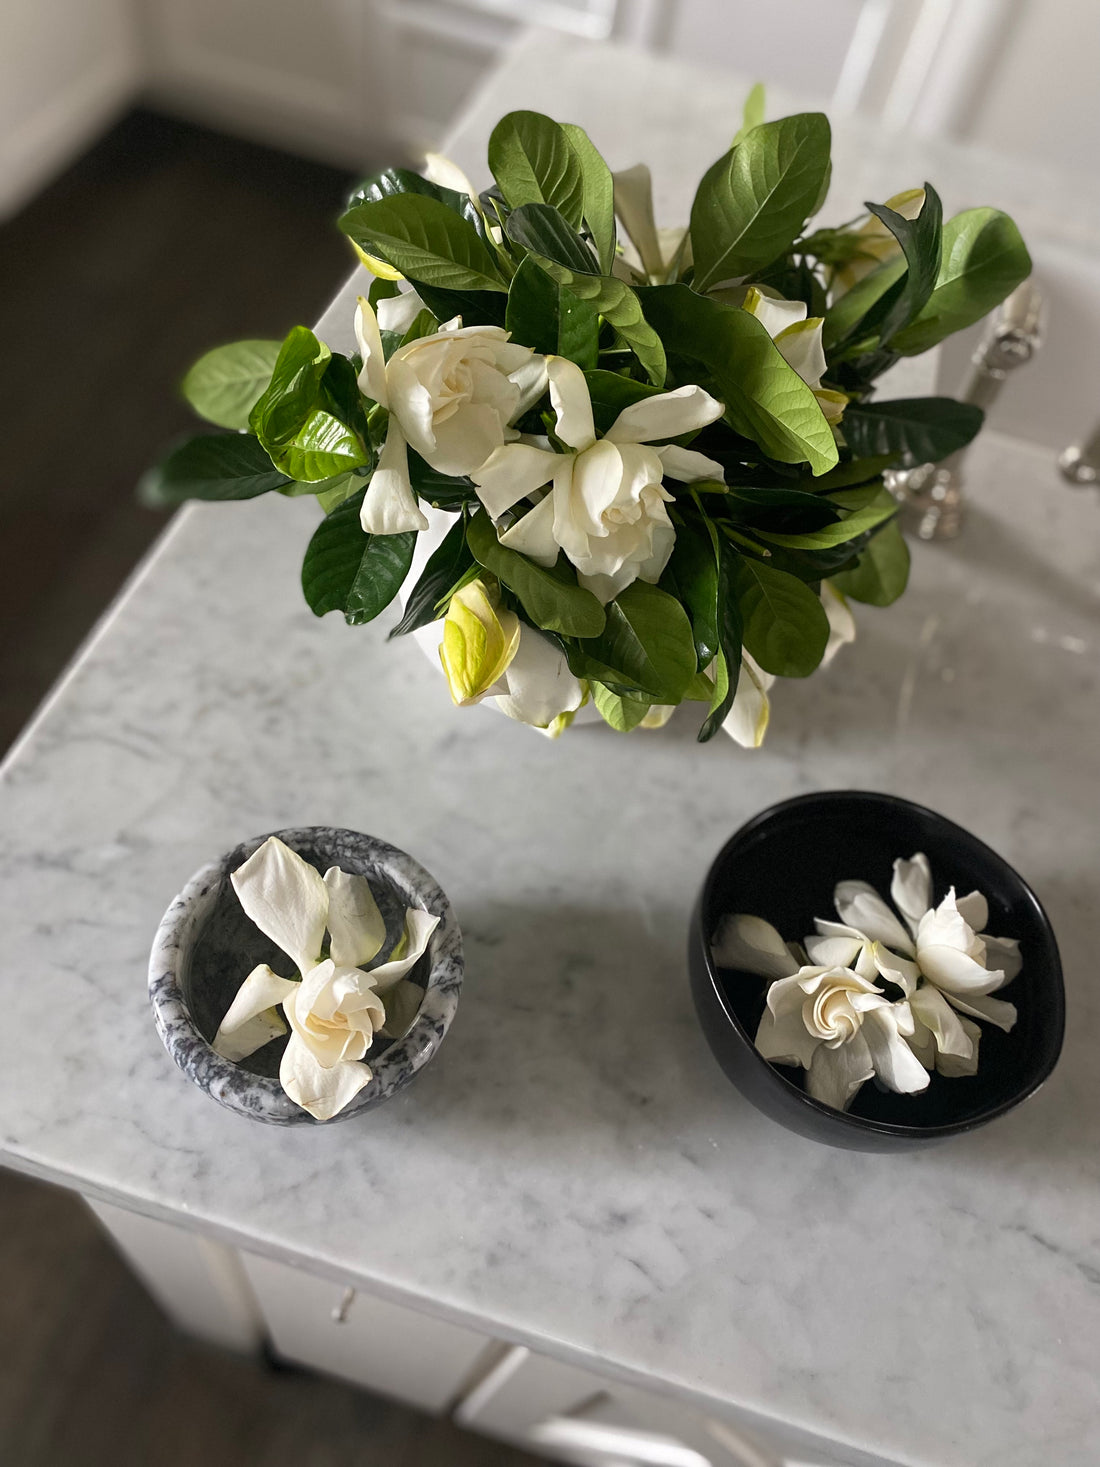 beautiful gardenia arrangement in vase and bowls